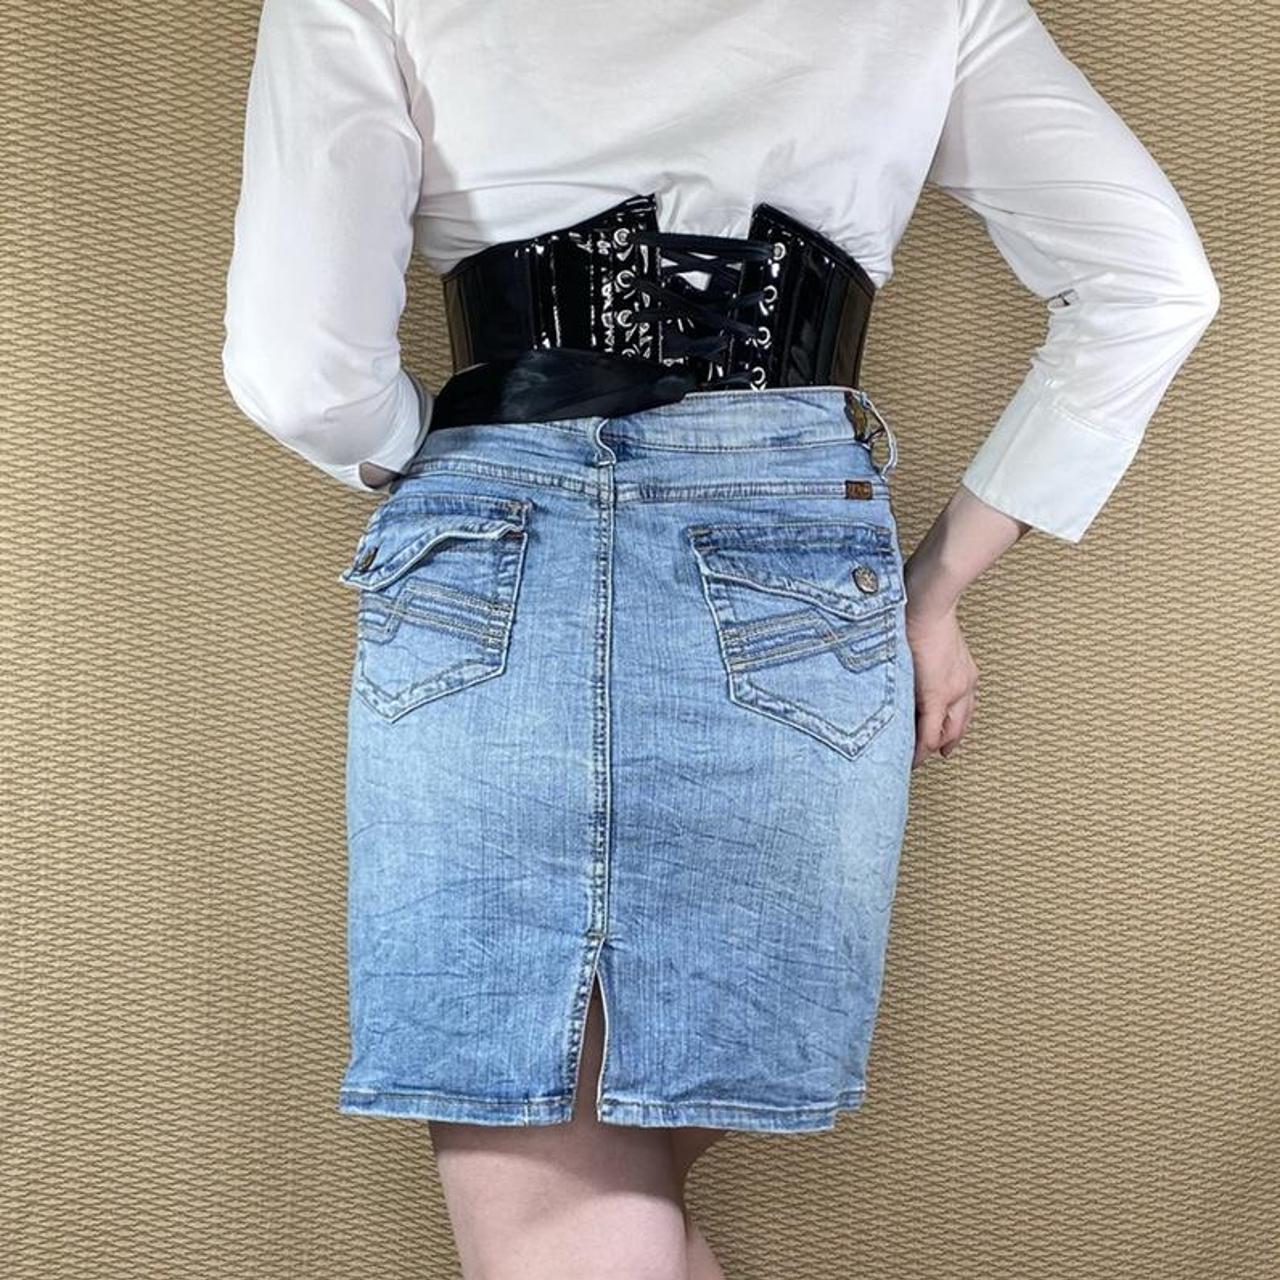 Product Image 2 - Midi jean skirt, size 18.

Clothing